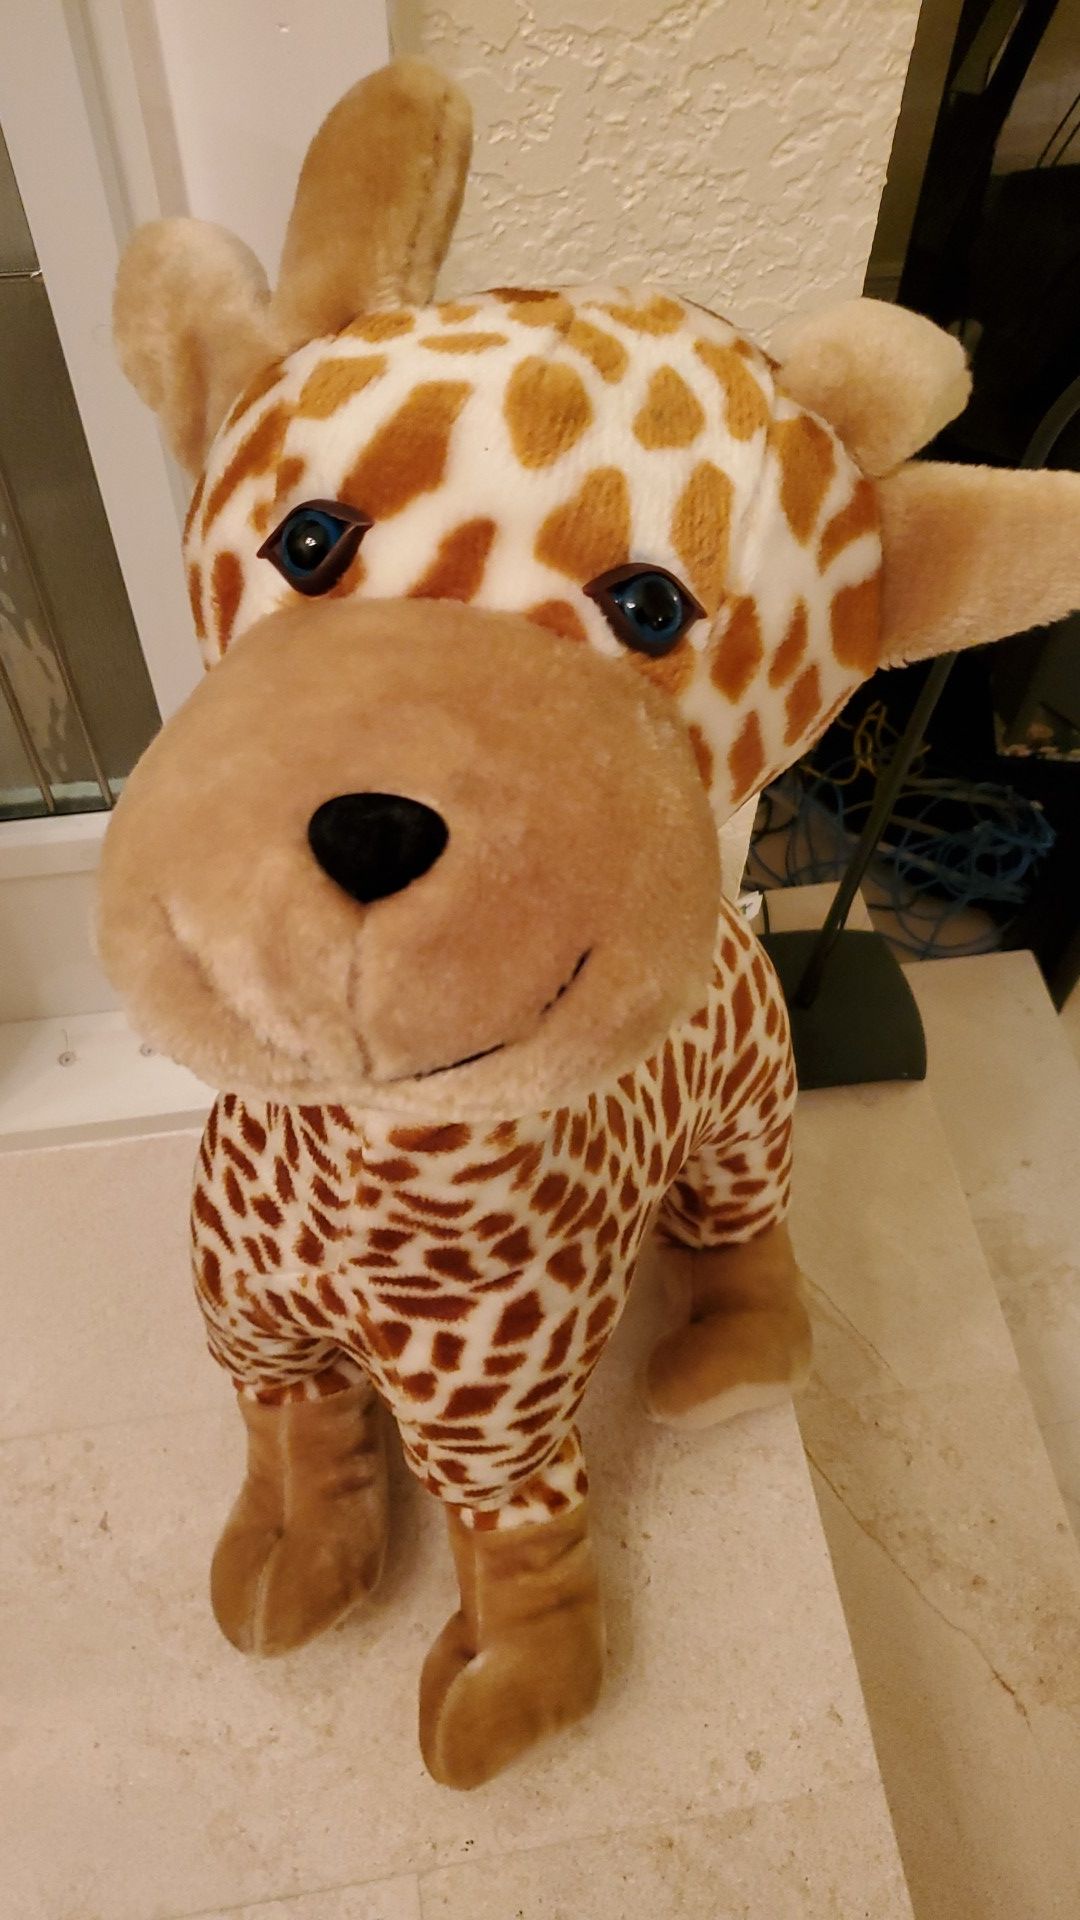 Giant giraffe stuffed animal and inflatable plush